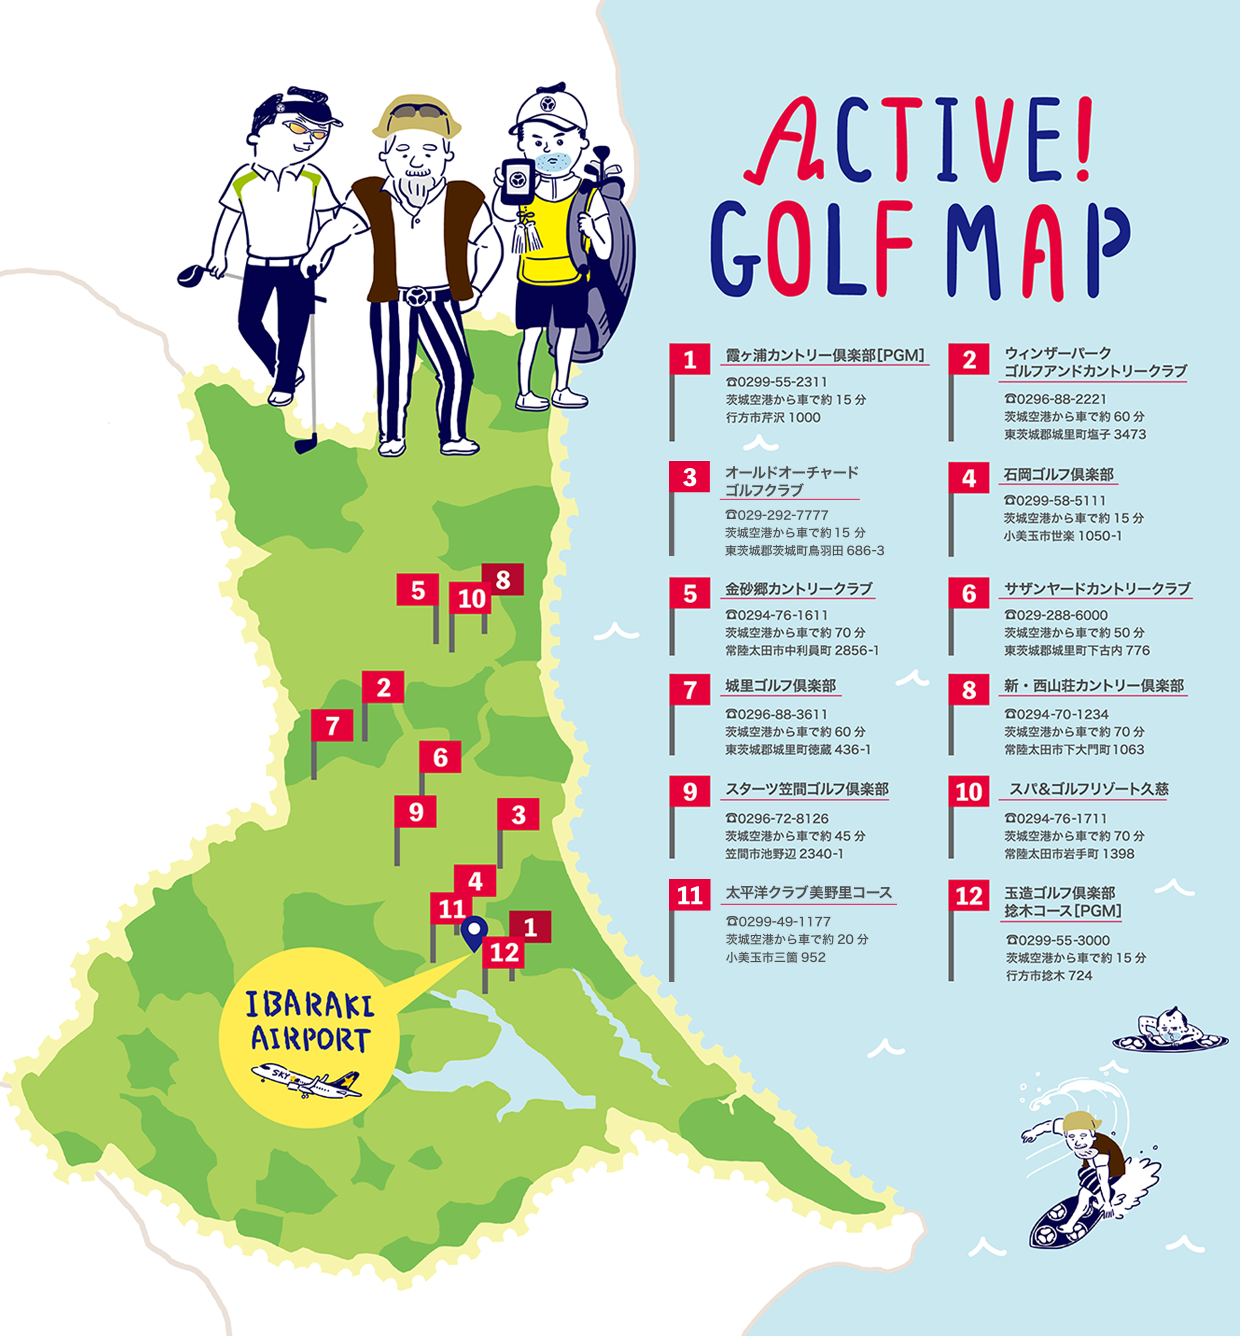 ACTIVE! GOLF MAP